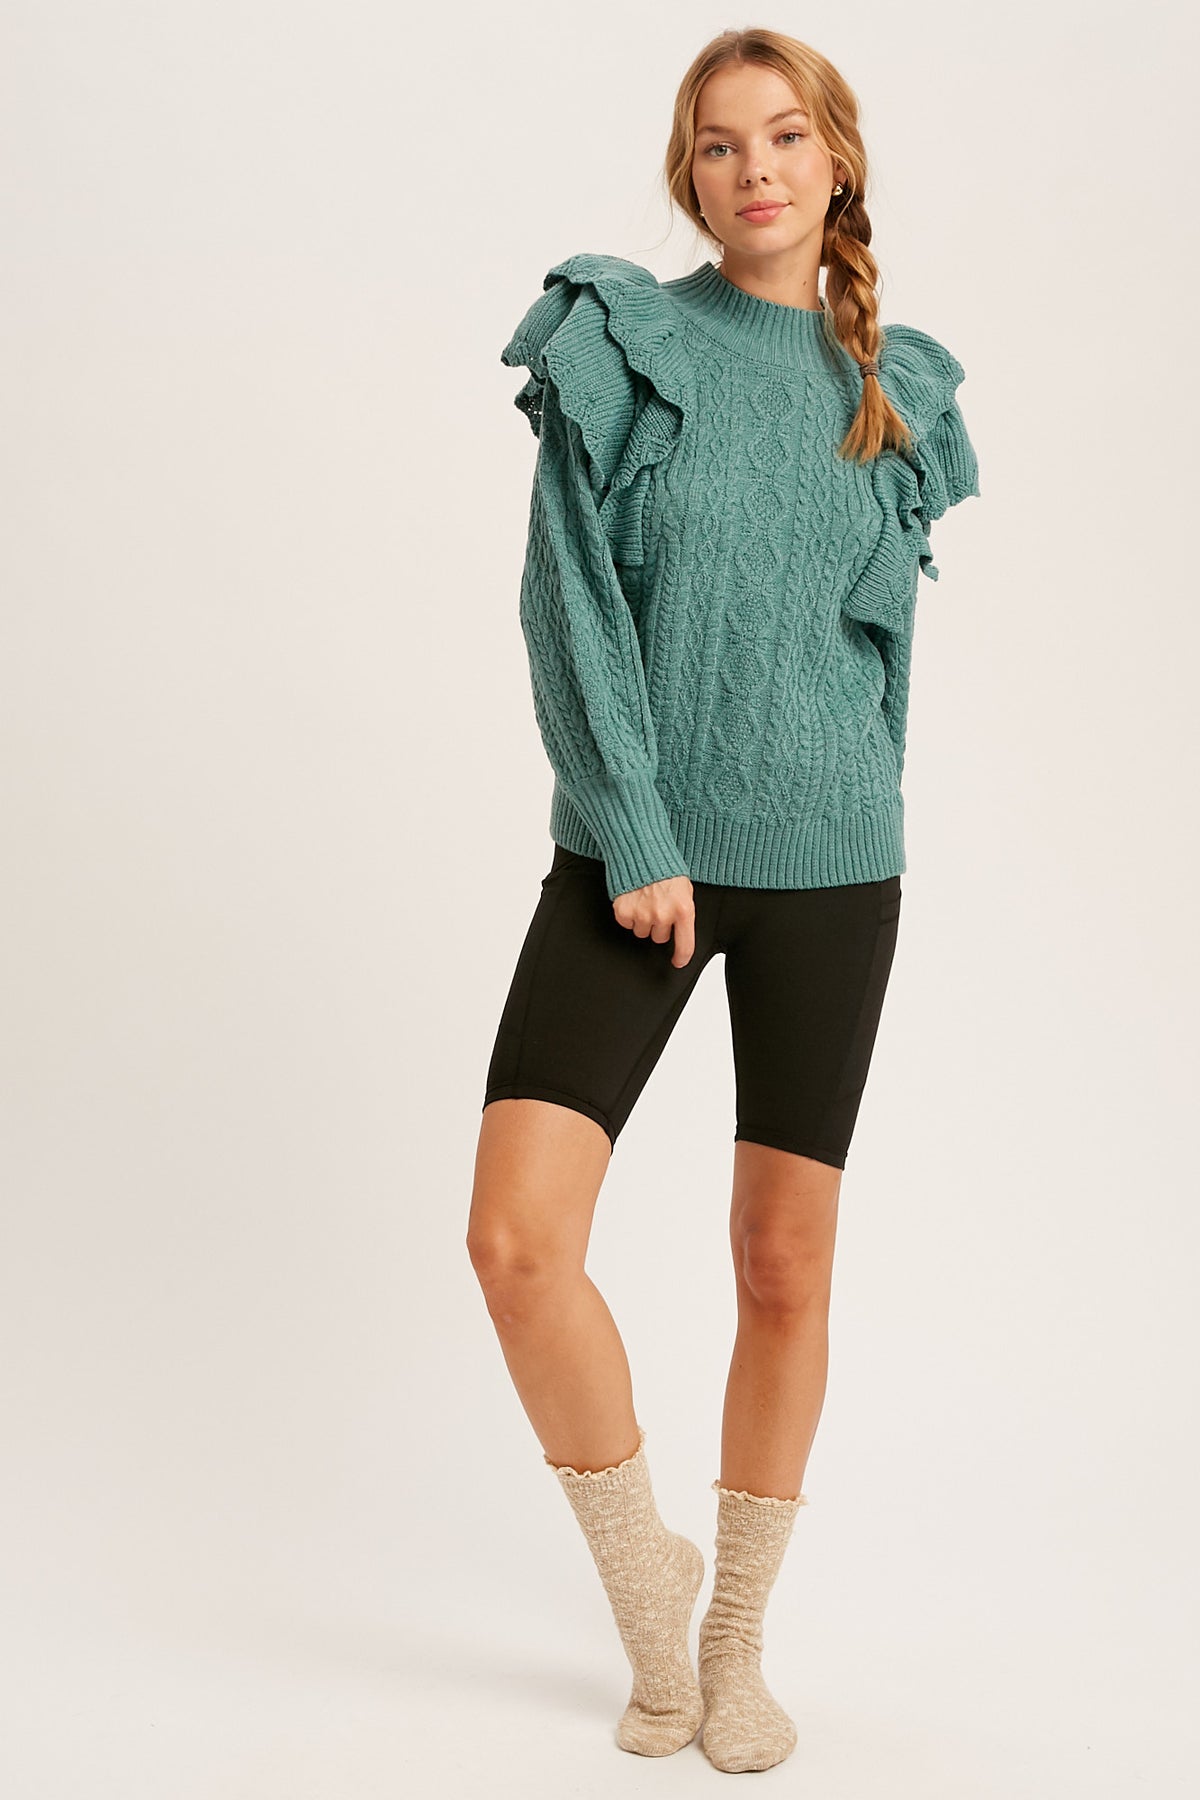 Celeste Ruffle Cable Knit Sweater